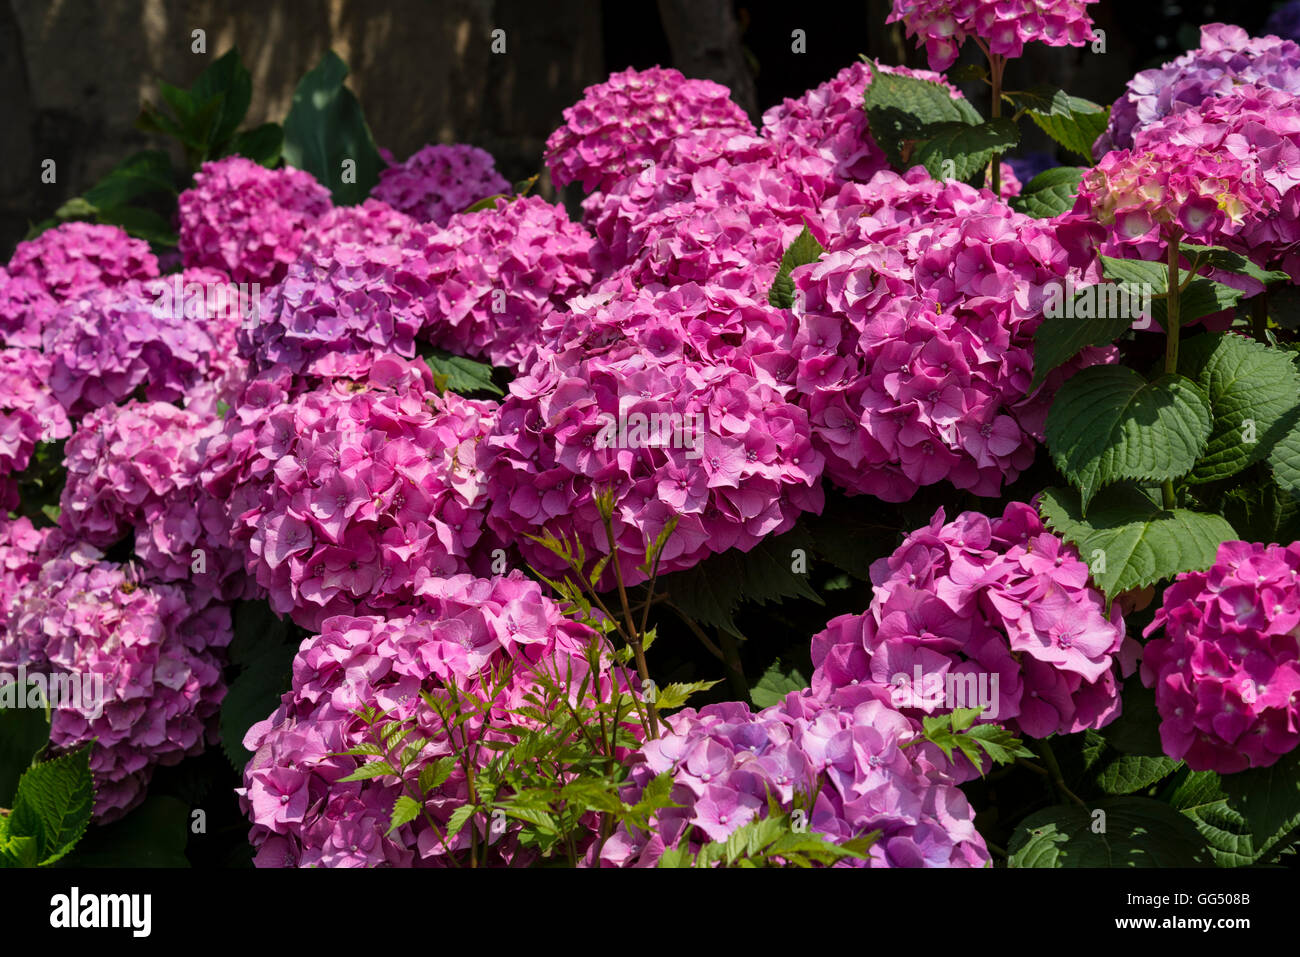 Hydrangea shrub in full bloom Stock Photo